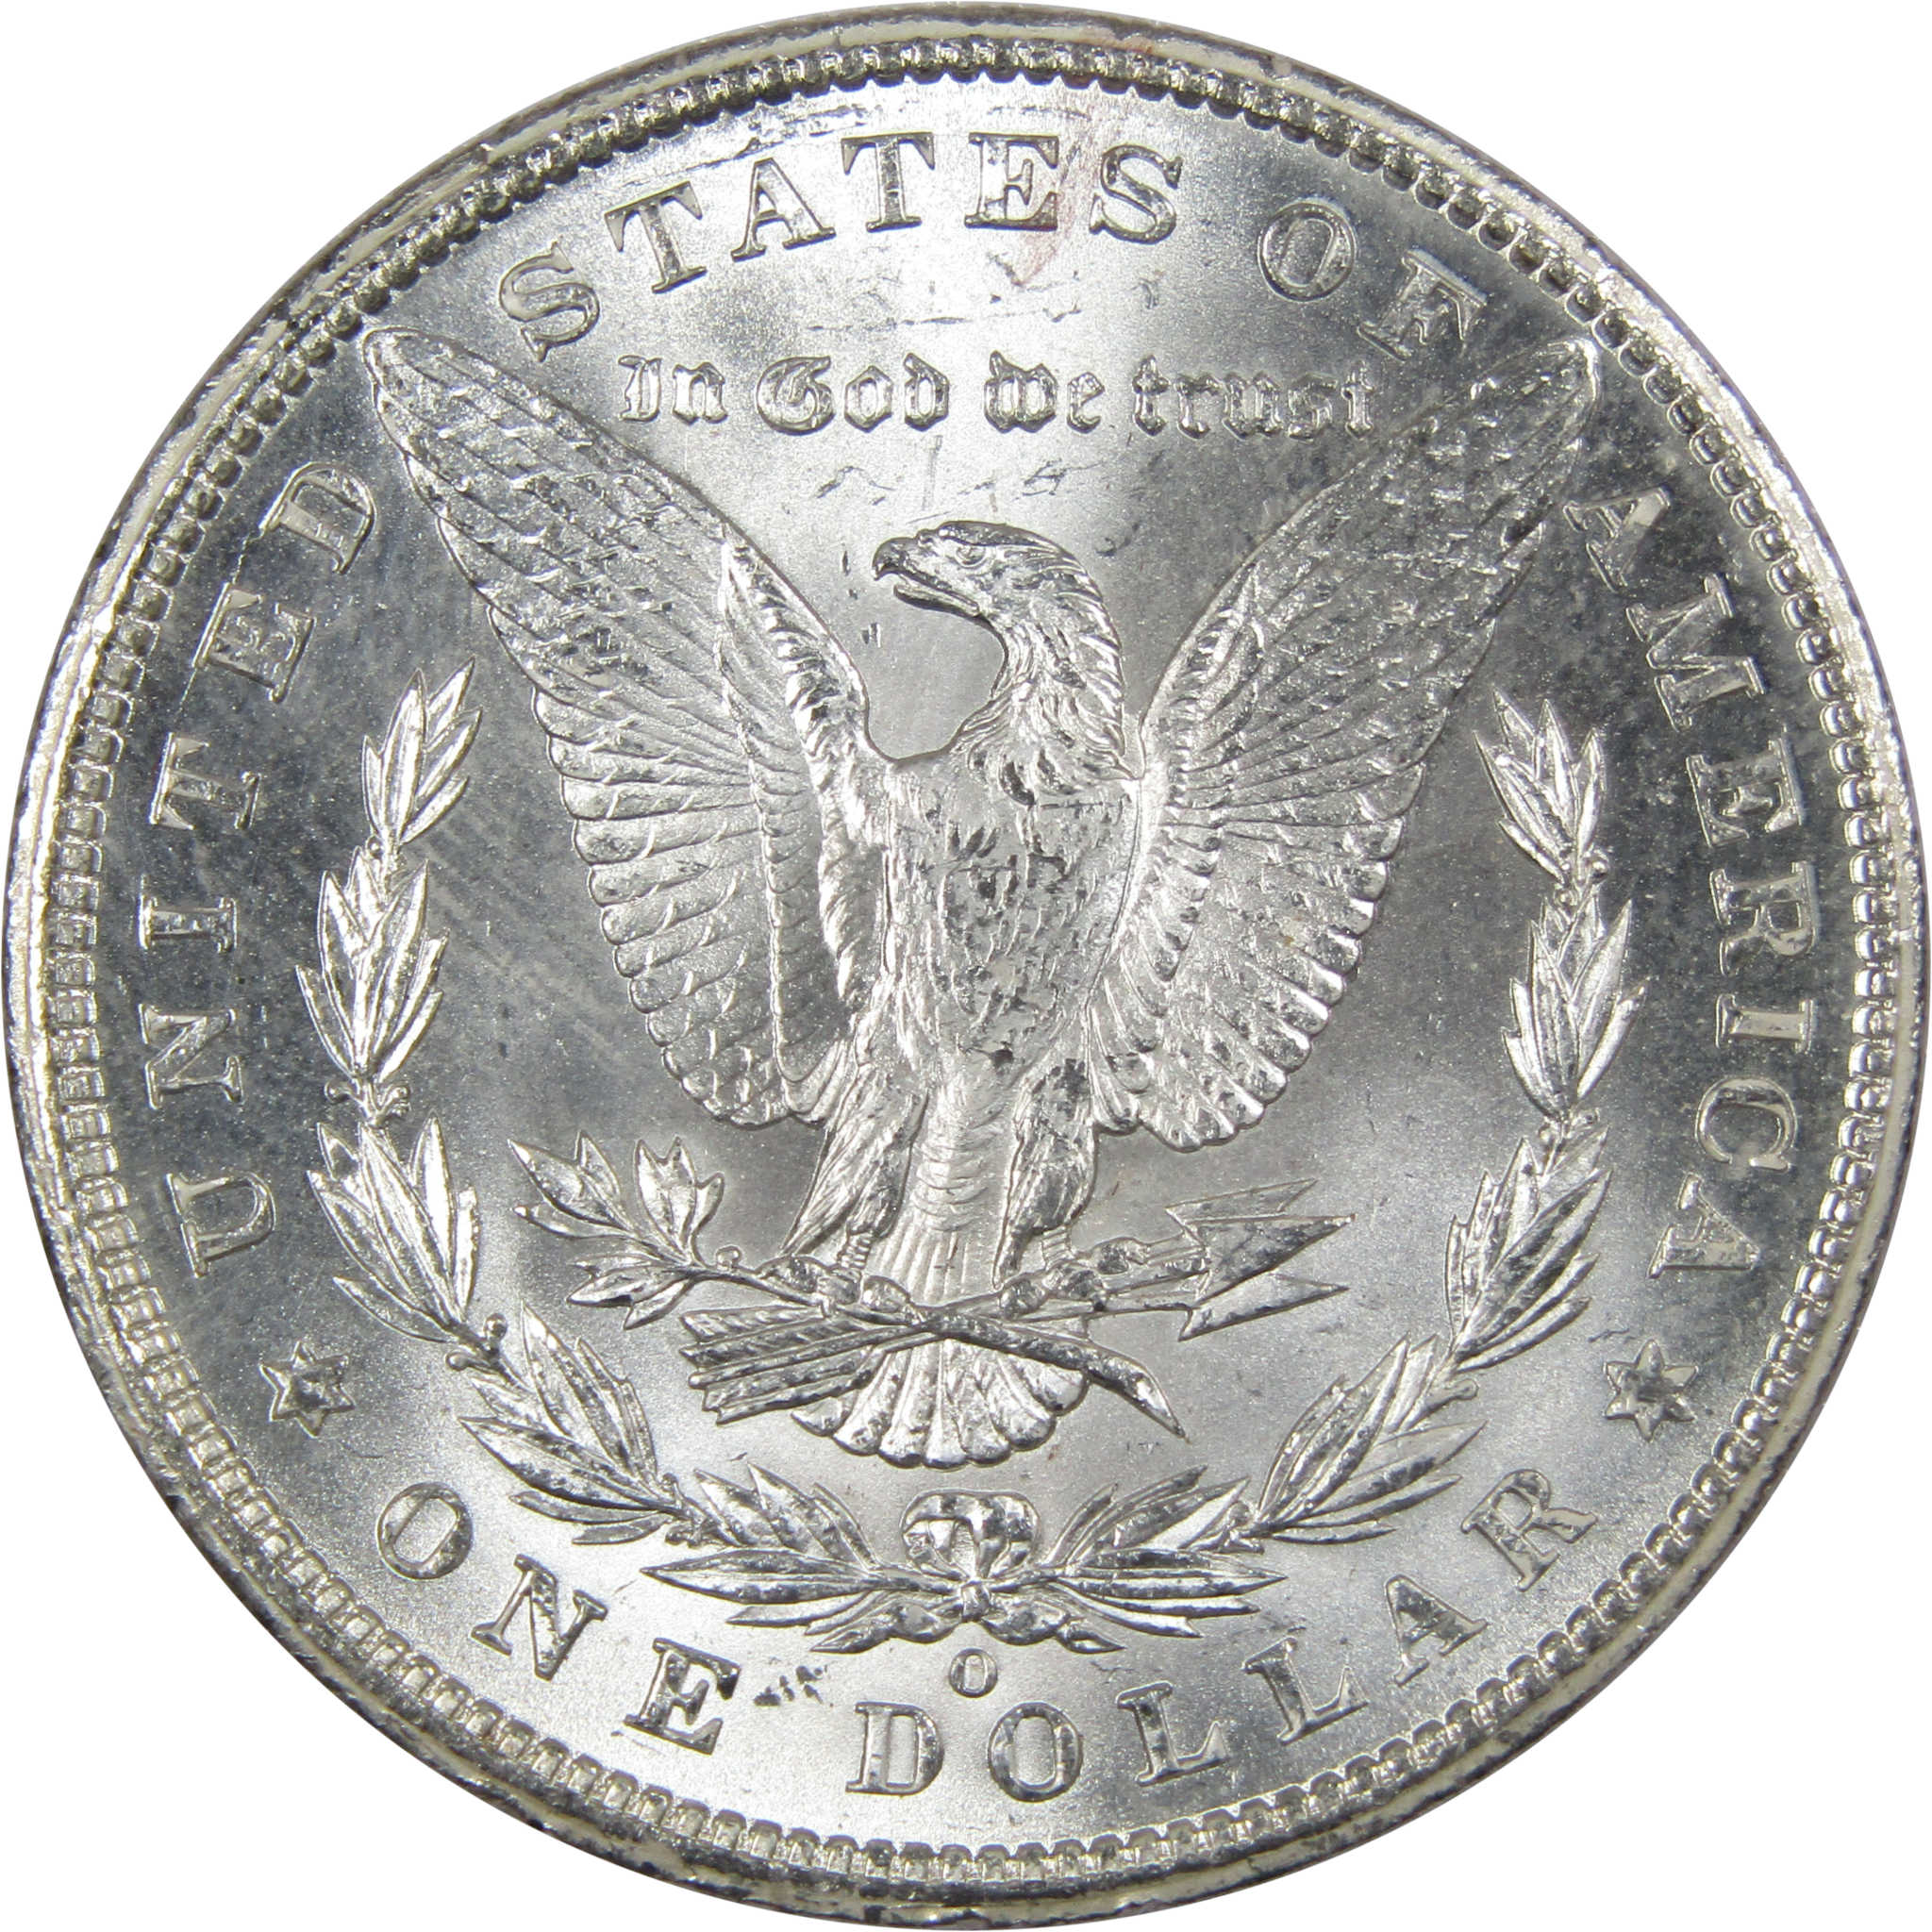 1900 O Morgan Dollar BU Uncirculated Mint State 90% Silver SKU:IPC9736 - Morgan coin - Morgan silver dollar - Morgan silver dollar for sale - Profile Coins &amp; Collectibles